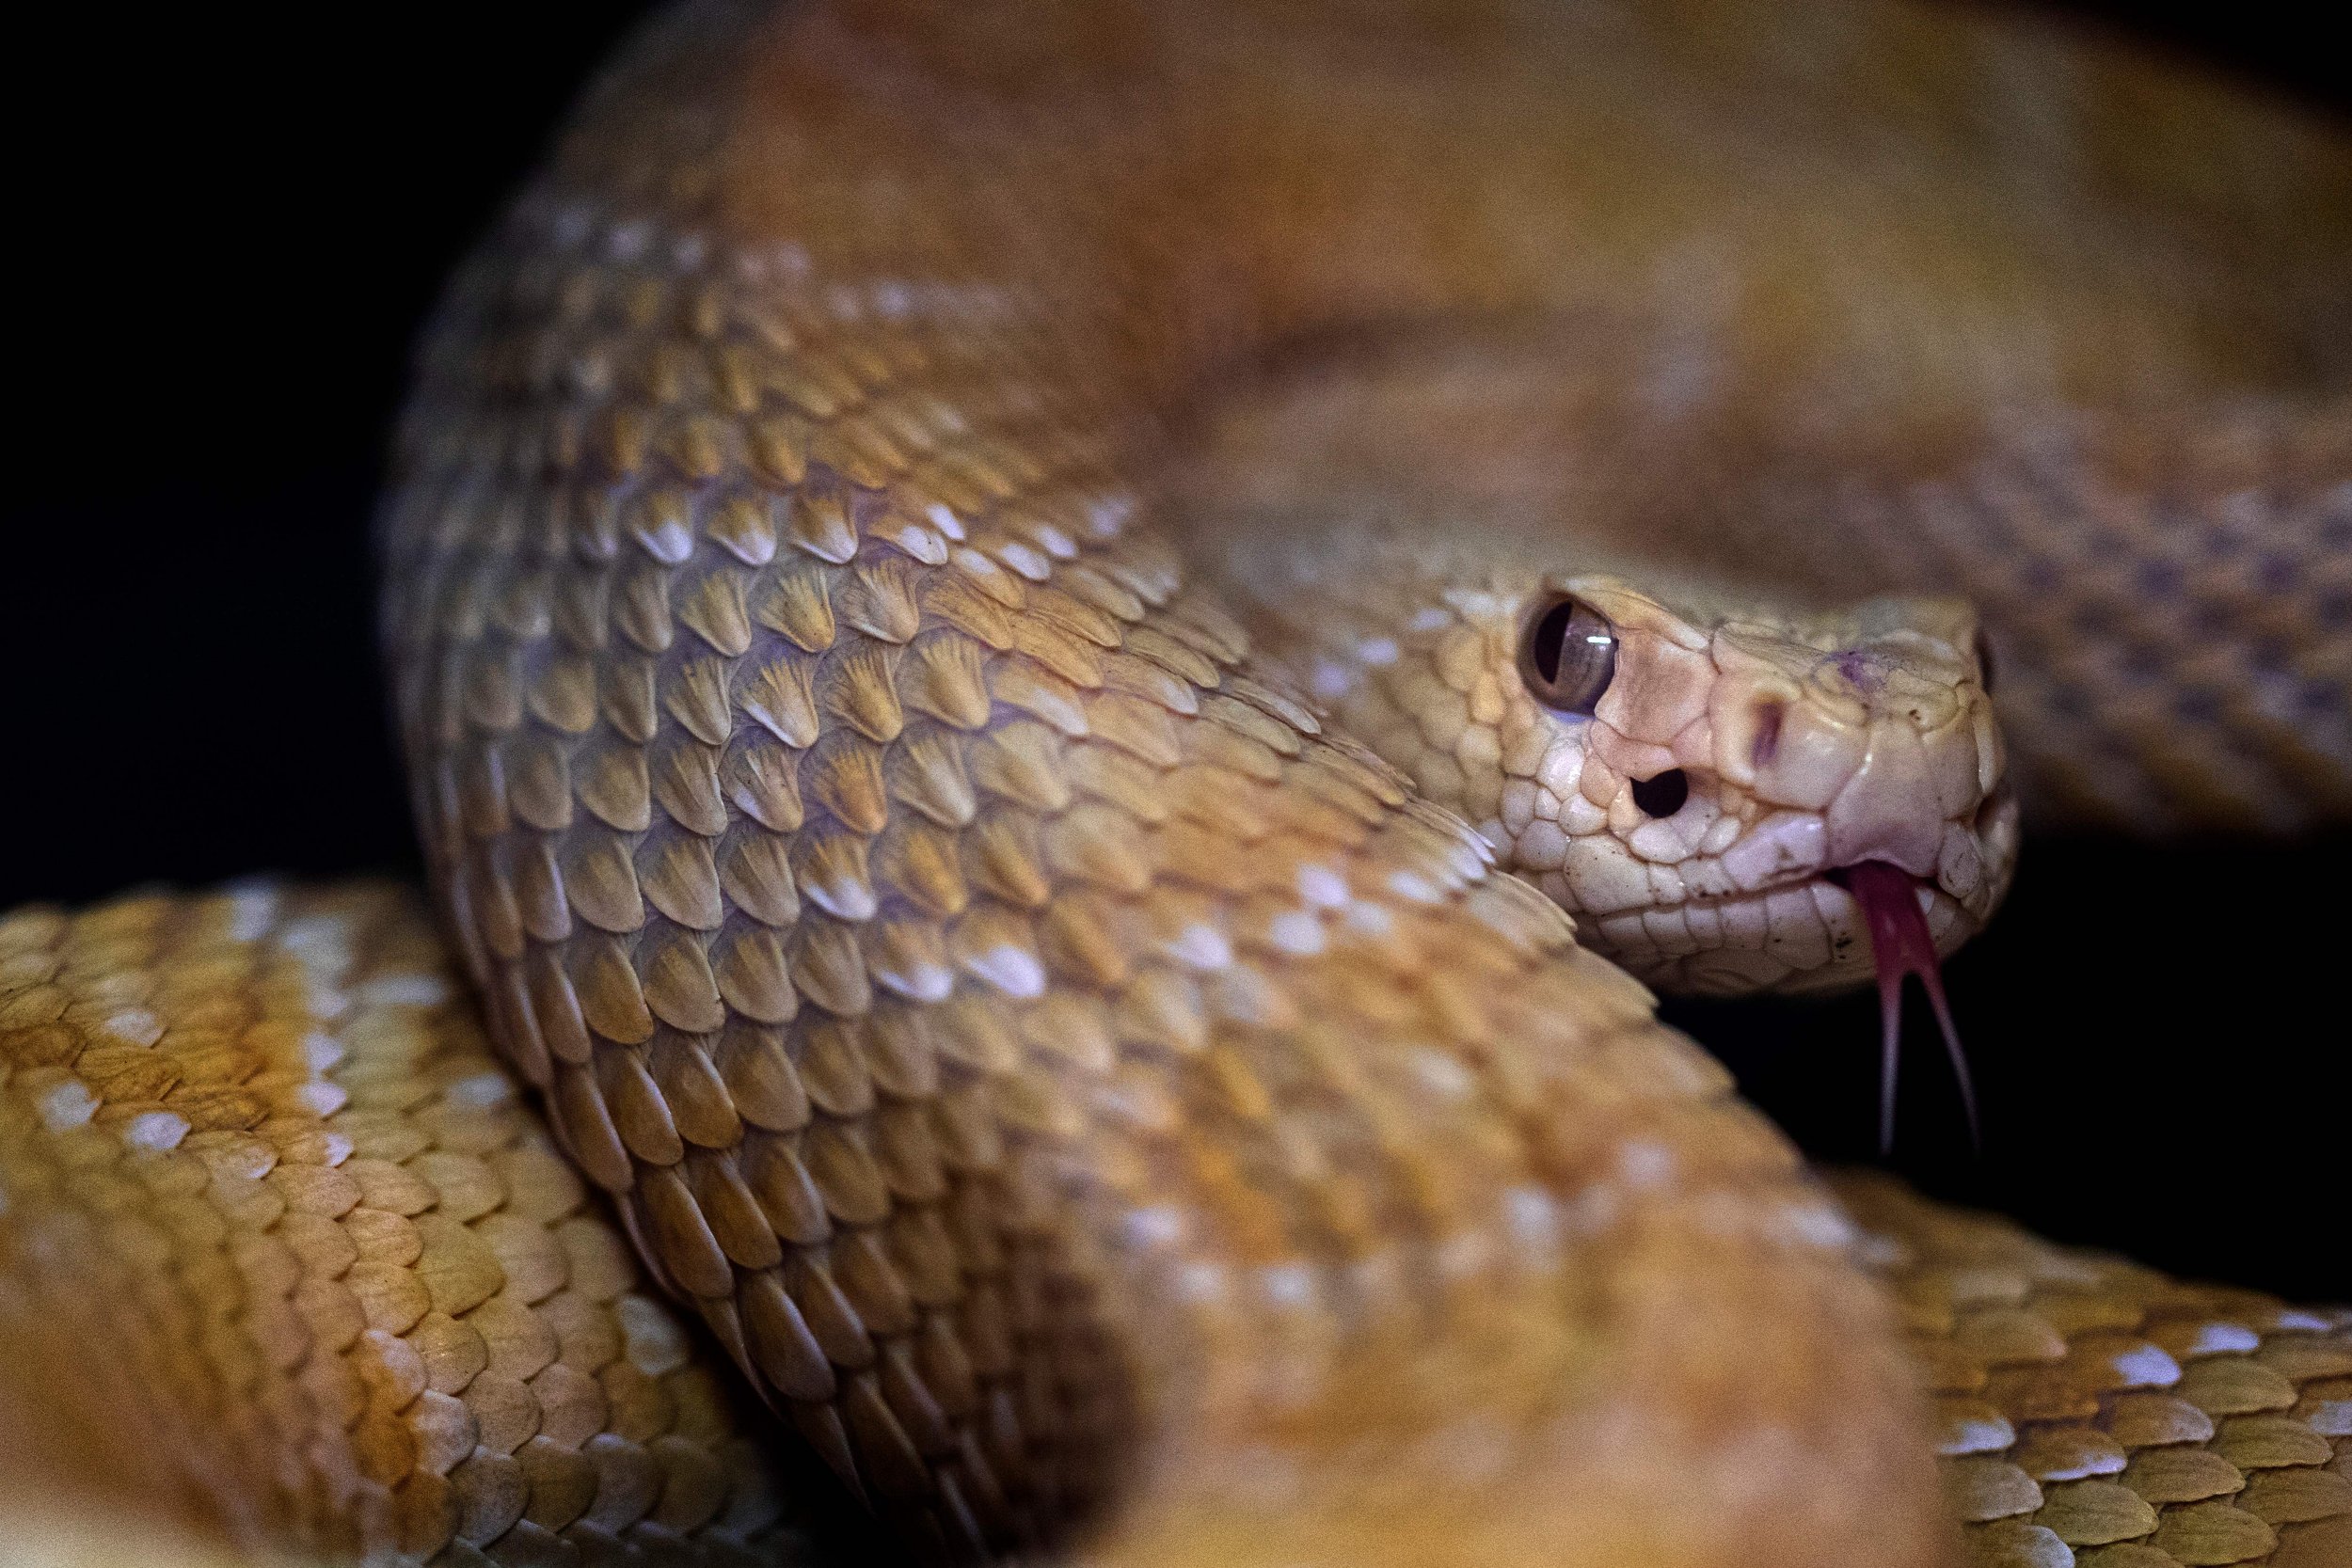 Snake Indonesia interrogation video